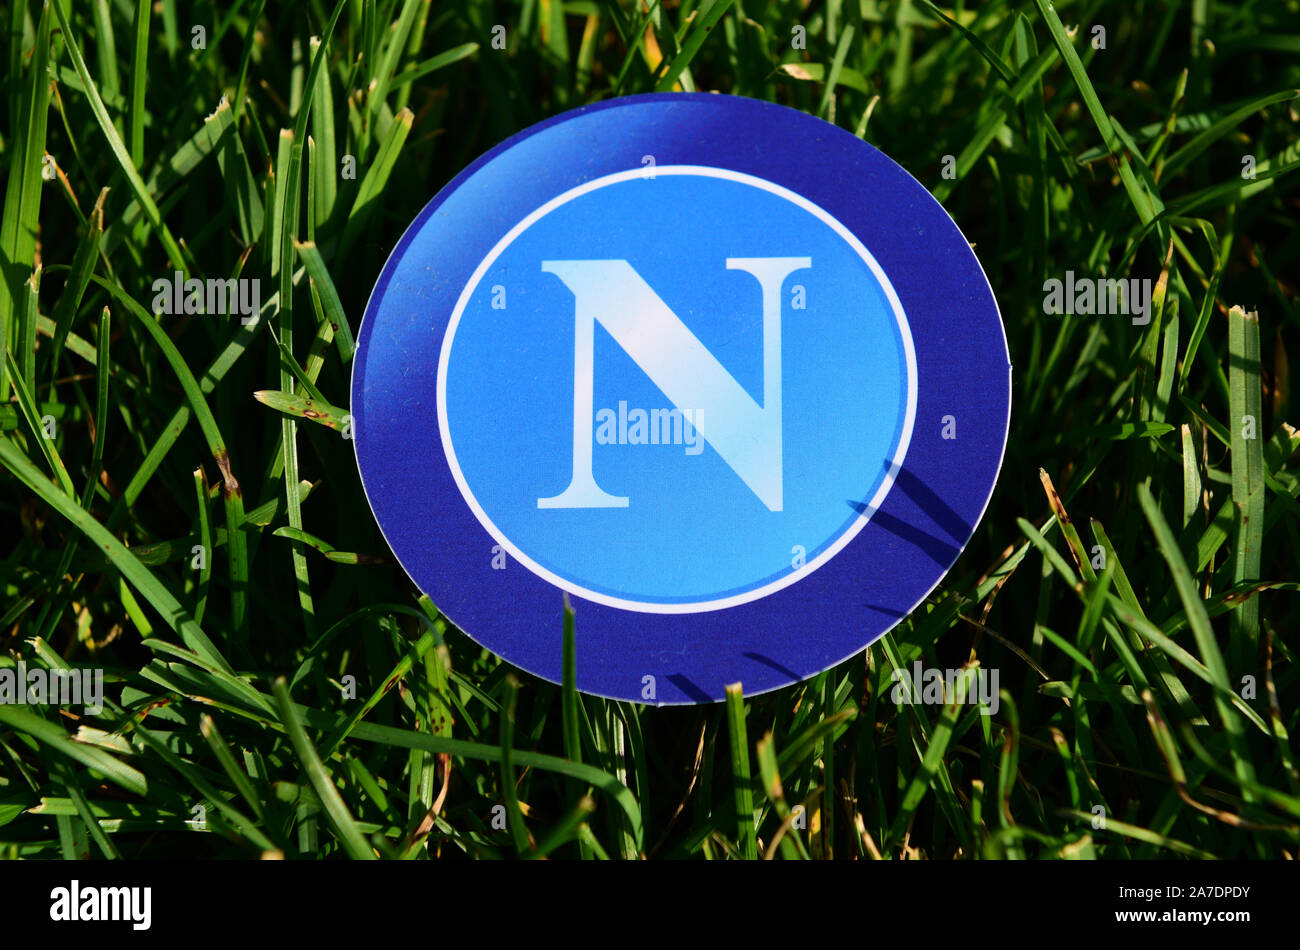 Napoli Calcio Tim Cup High Resolution Stock Photography and Images - Alamy